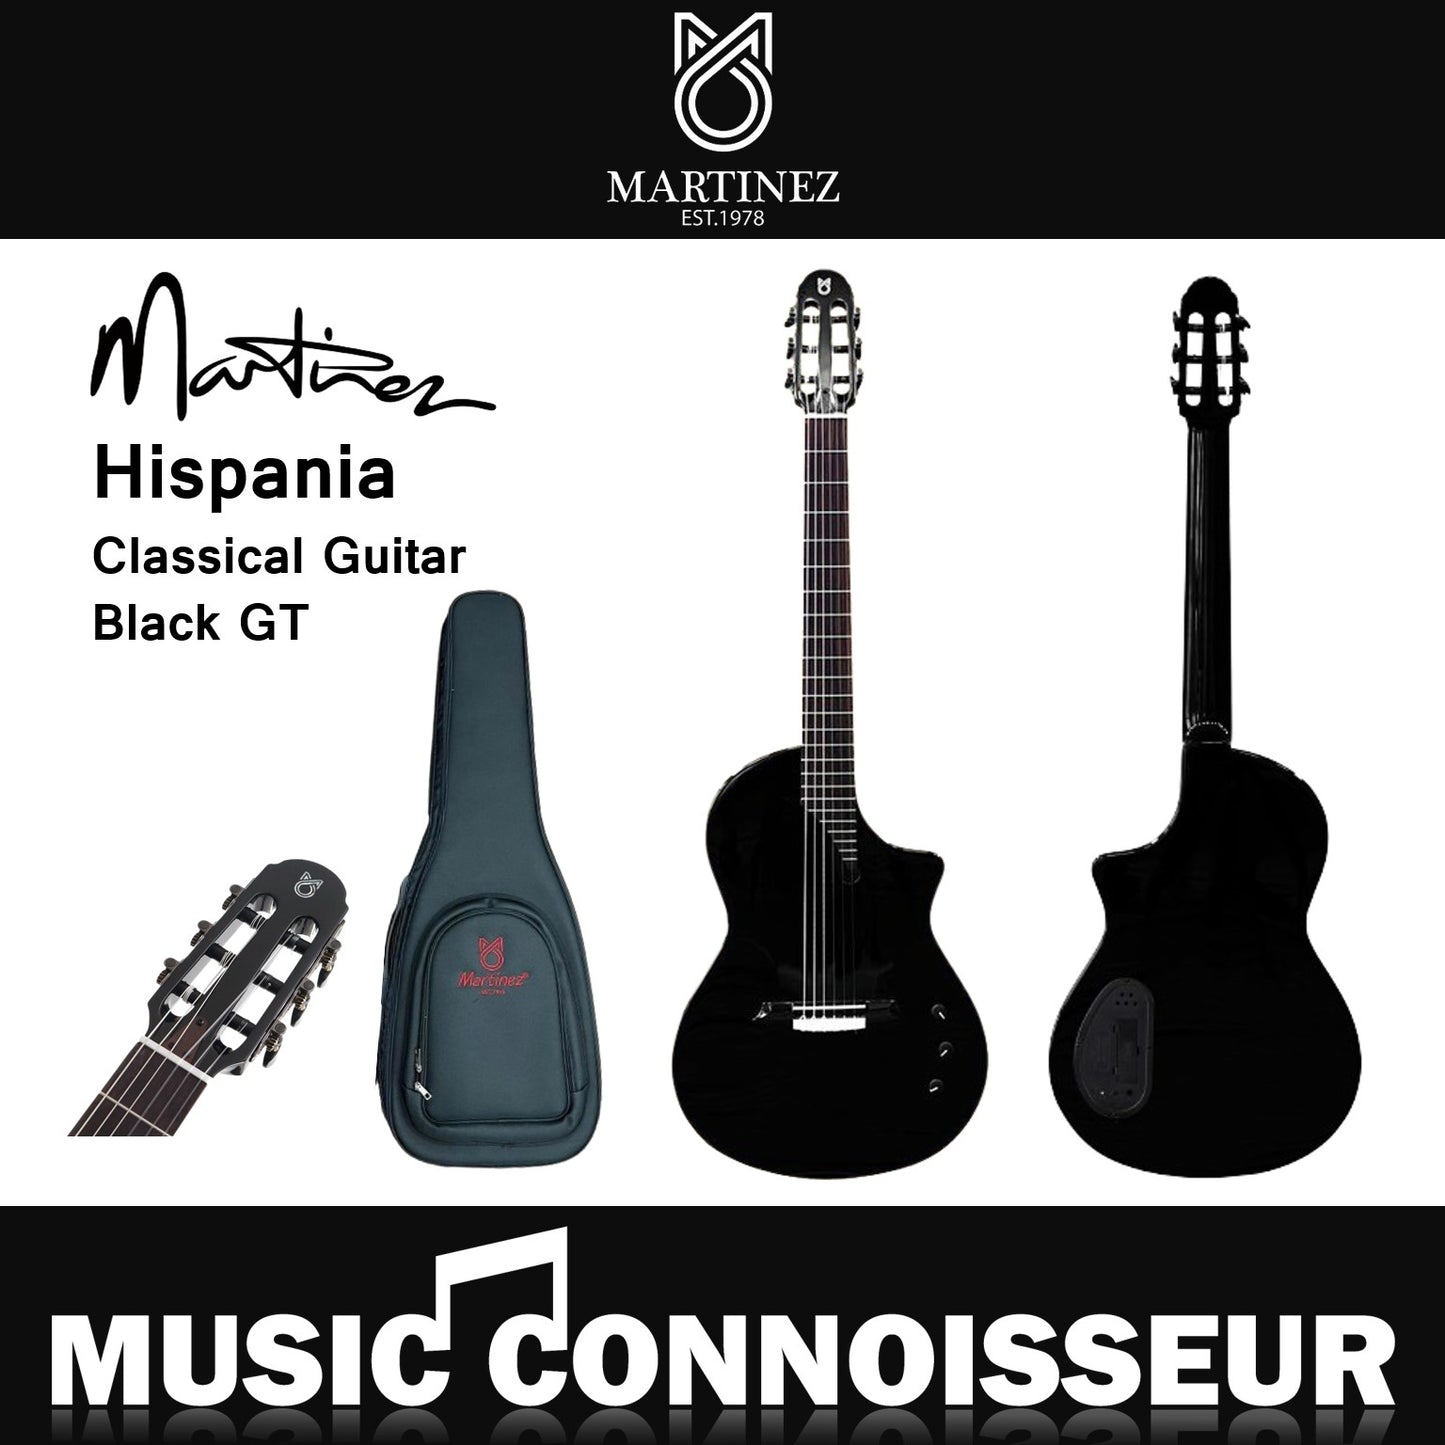 Martinez Hispania Classical Guitar Black GT